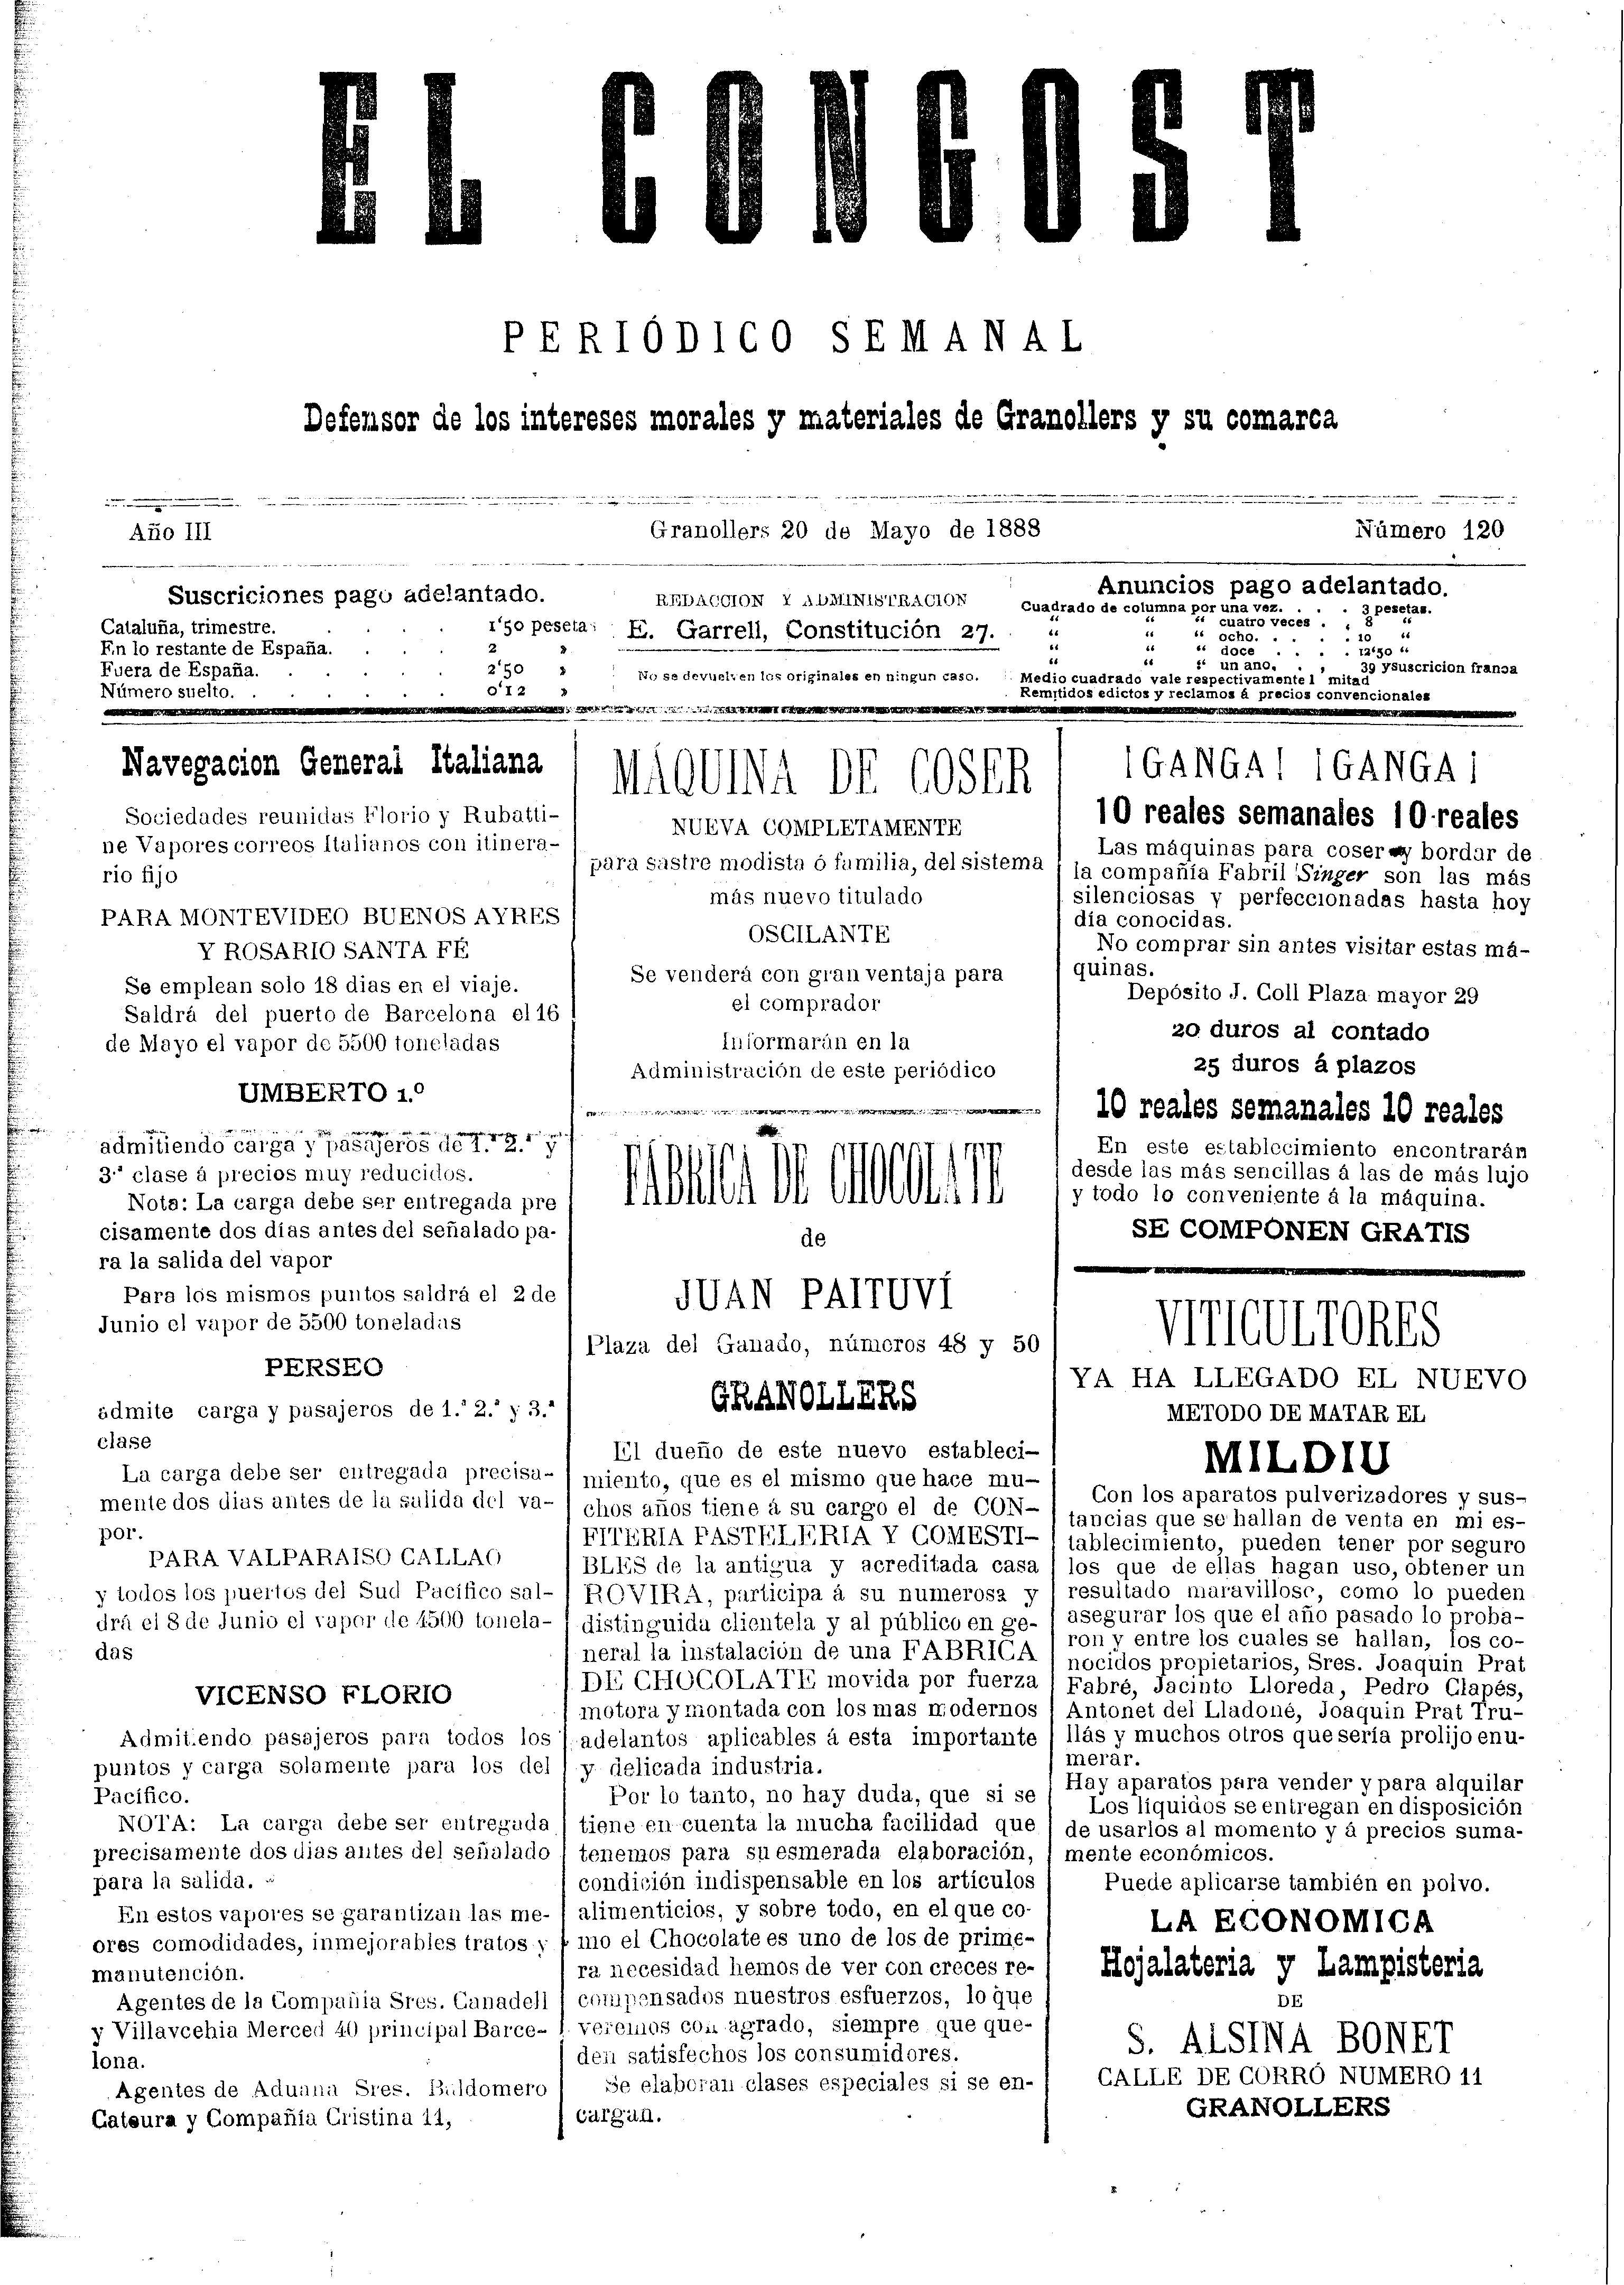 El Congost, 20/5/1888 [Exemplar]